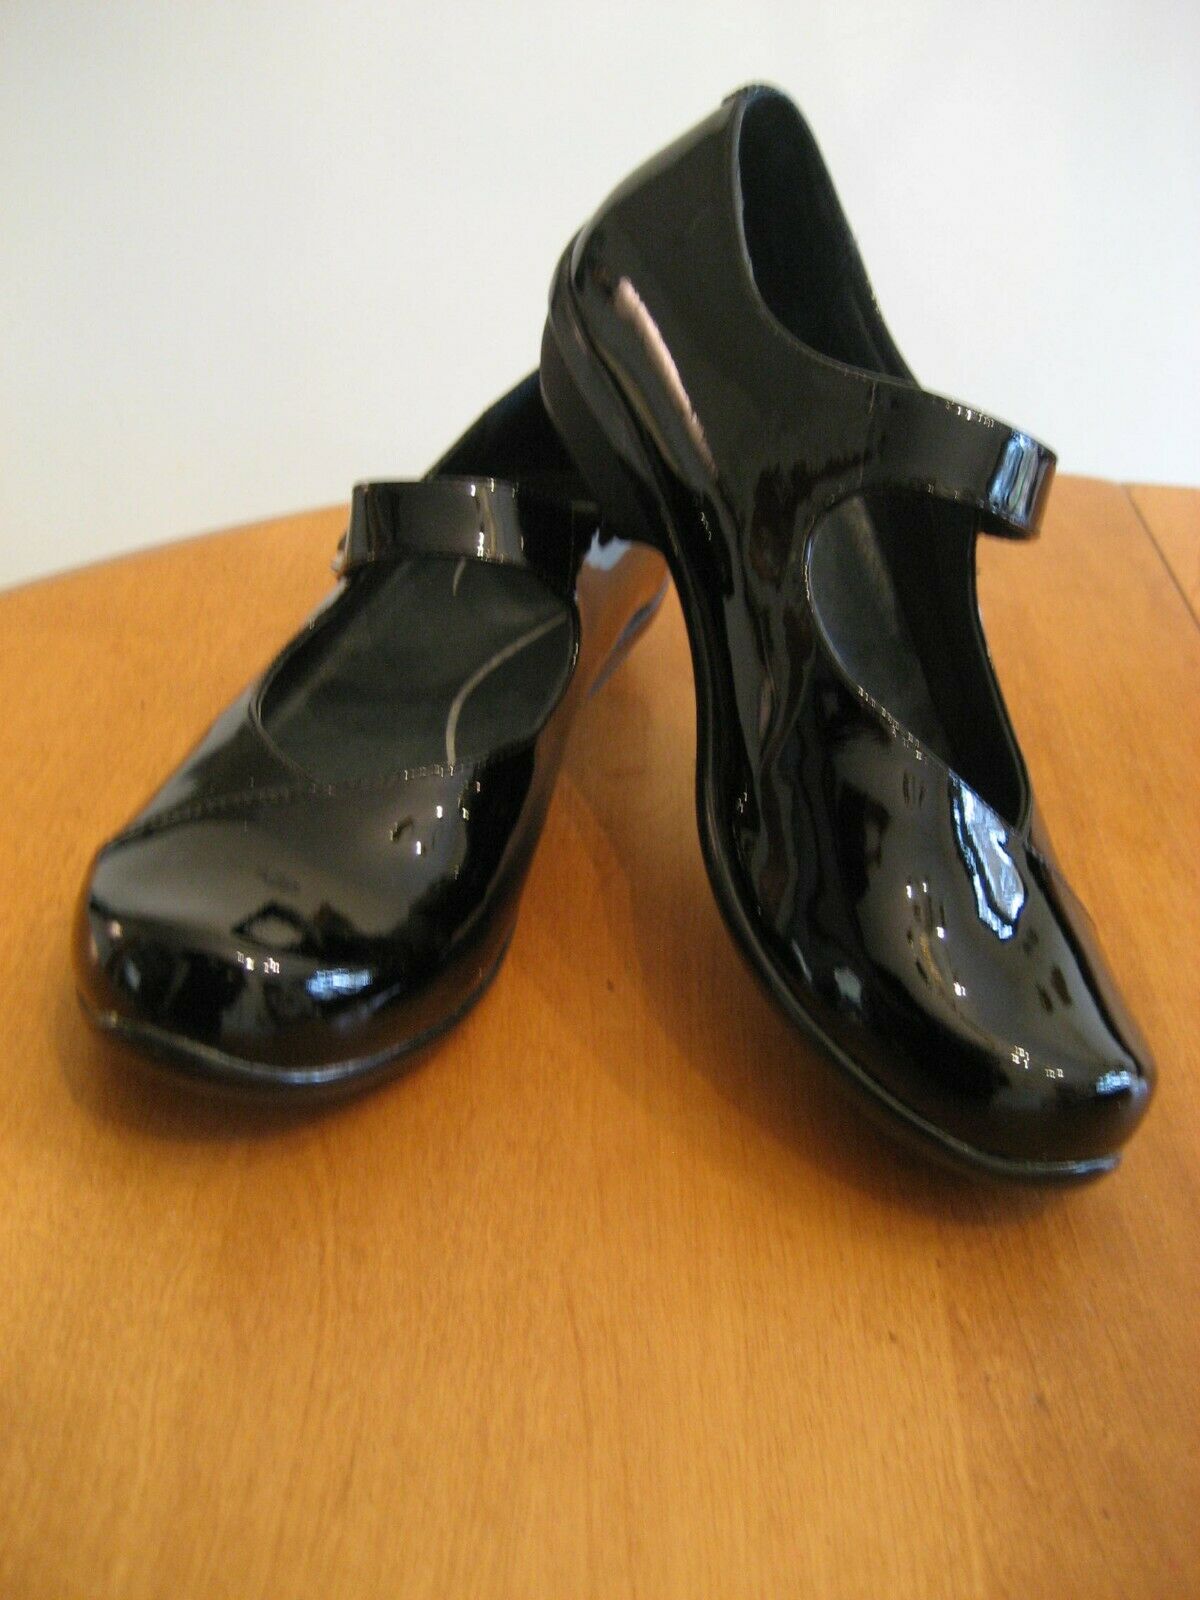 Dansko Opal Black Patent Leather Mary Jane Clog Shoe EU 38, US 7.5-8 NICE!!